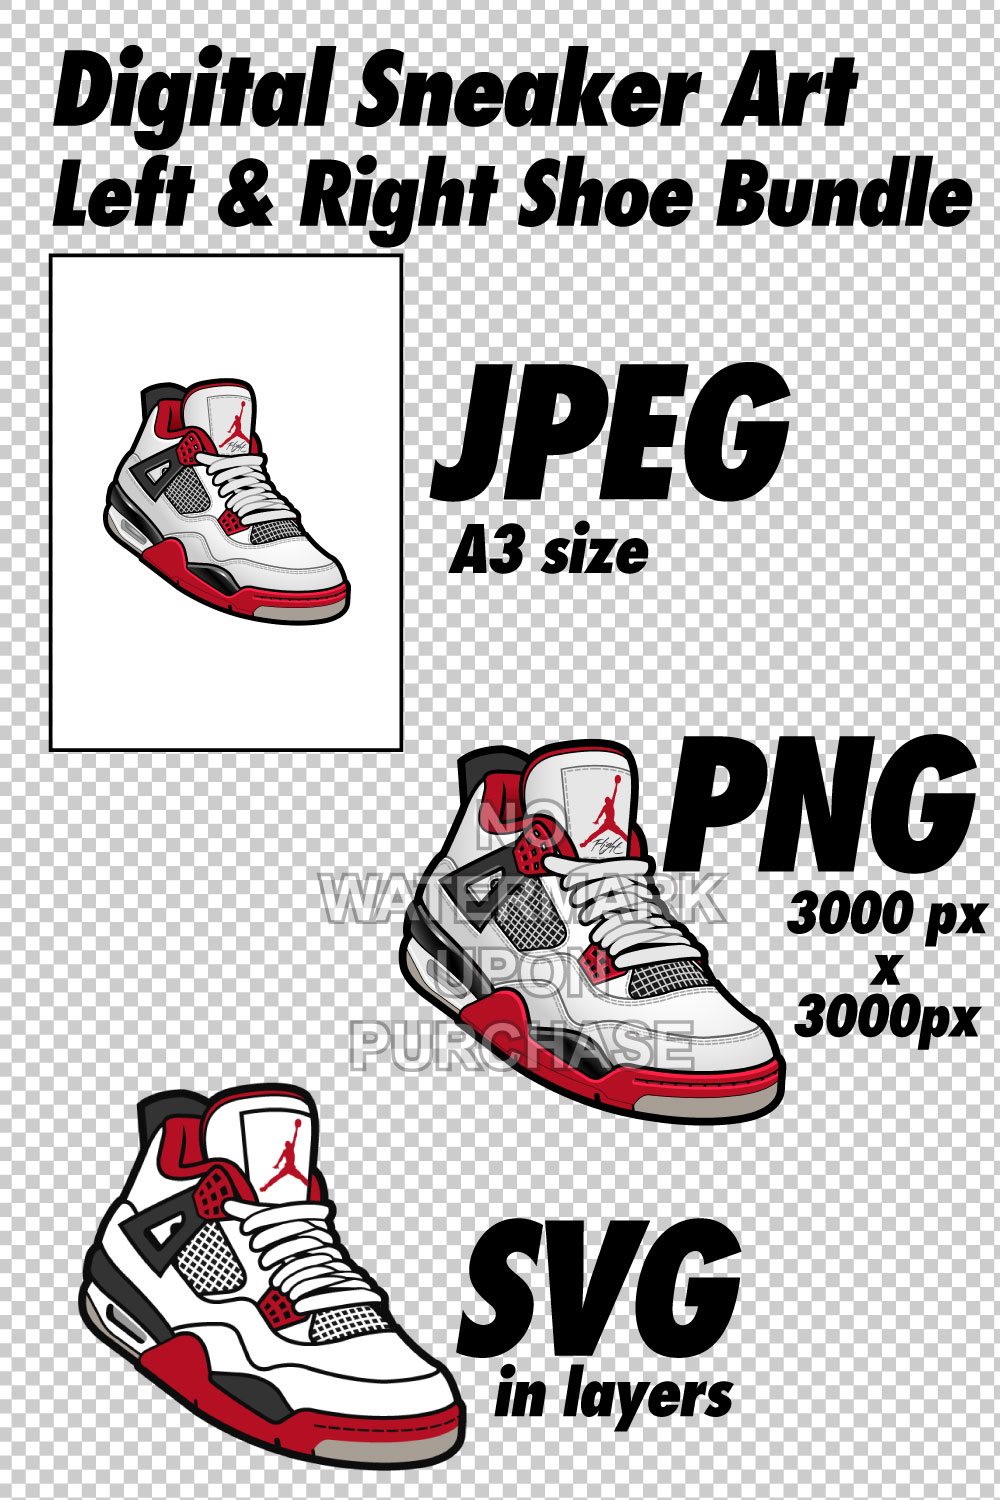 Air Jordan 4 Fire Red JPEG PNG SVG Sneaker Art right & left shoe bundle pinterest preview image.